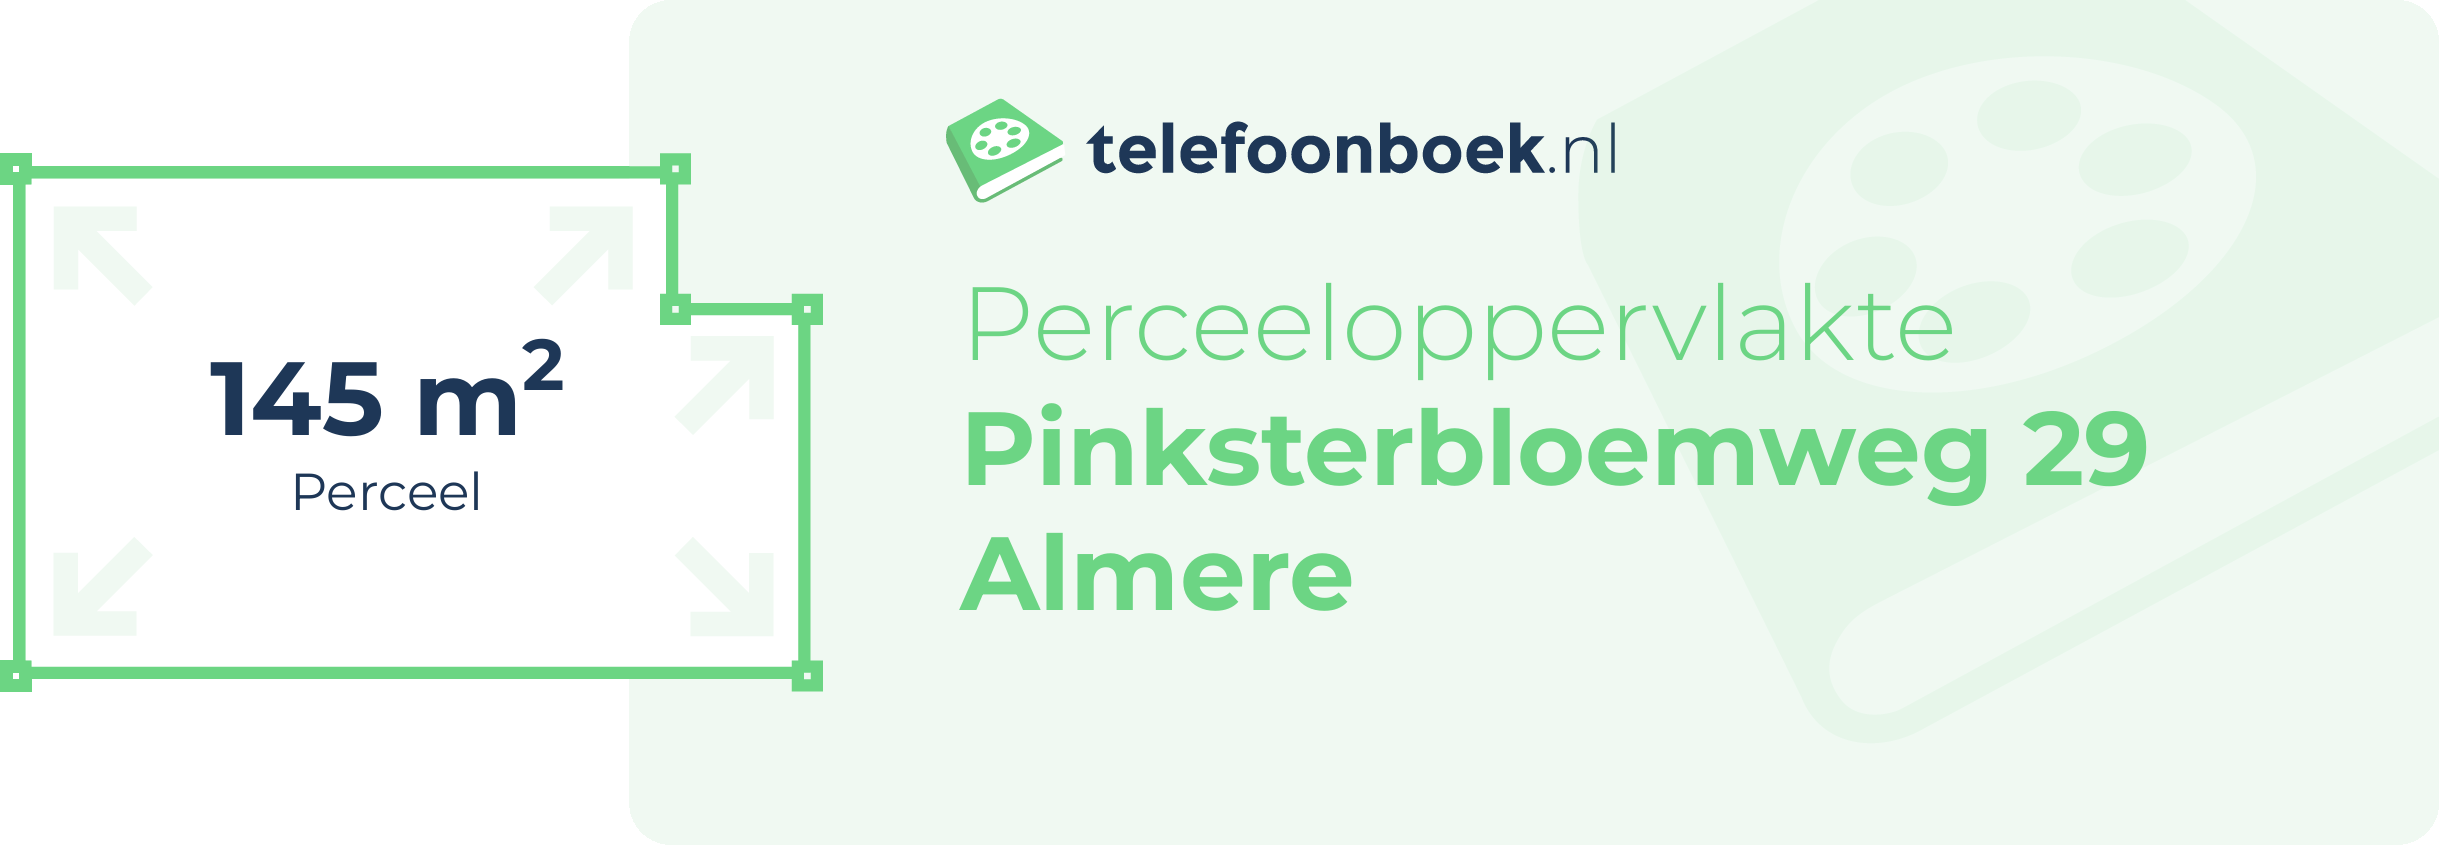 Perceeloppervlakte Pinksterbloemweg 29 Almere